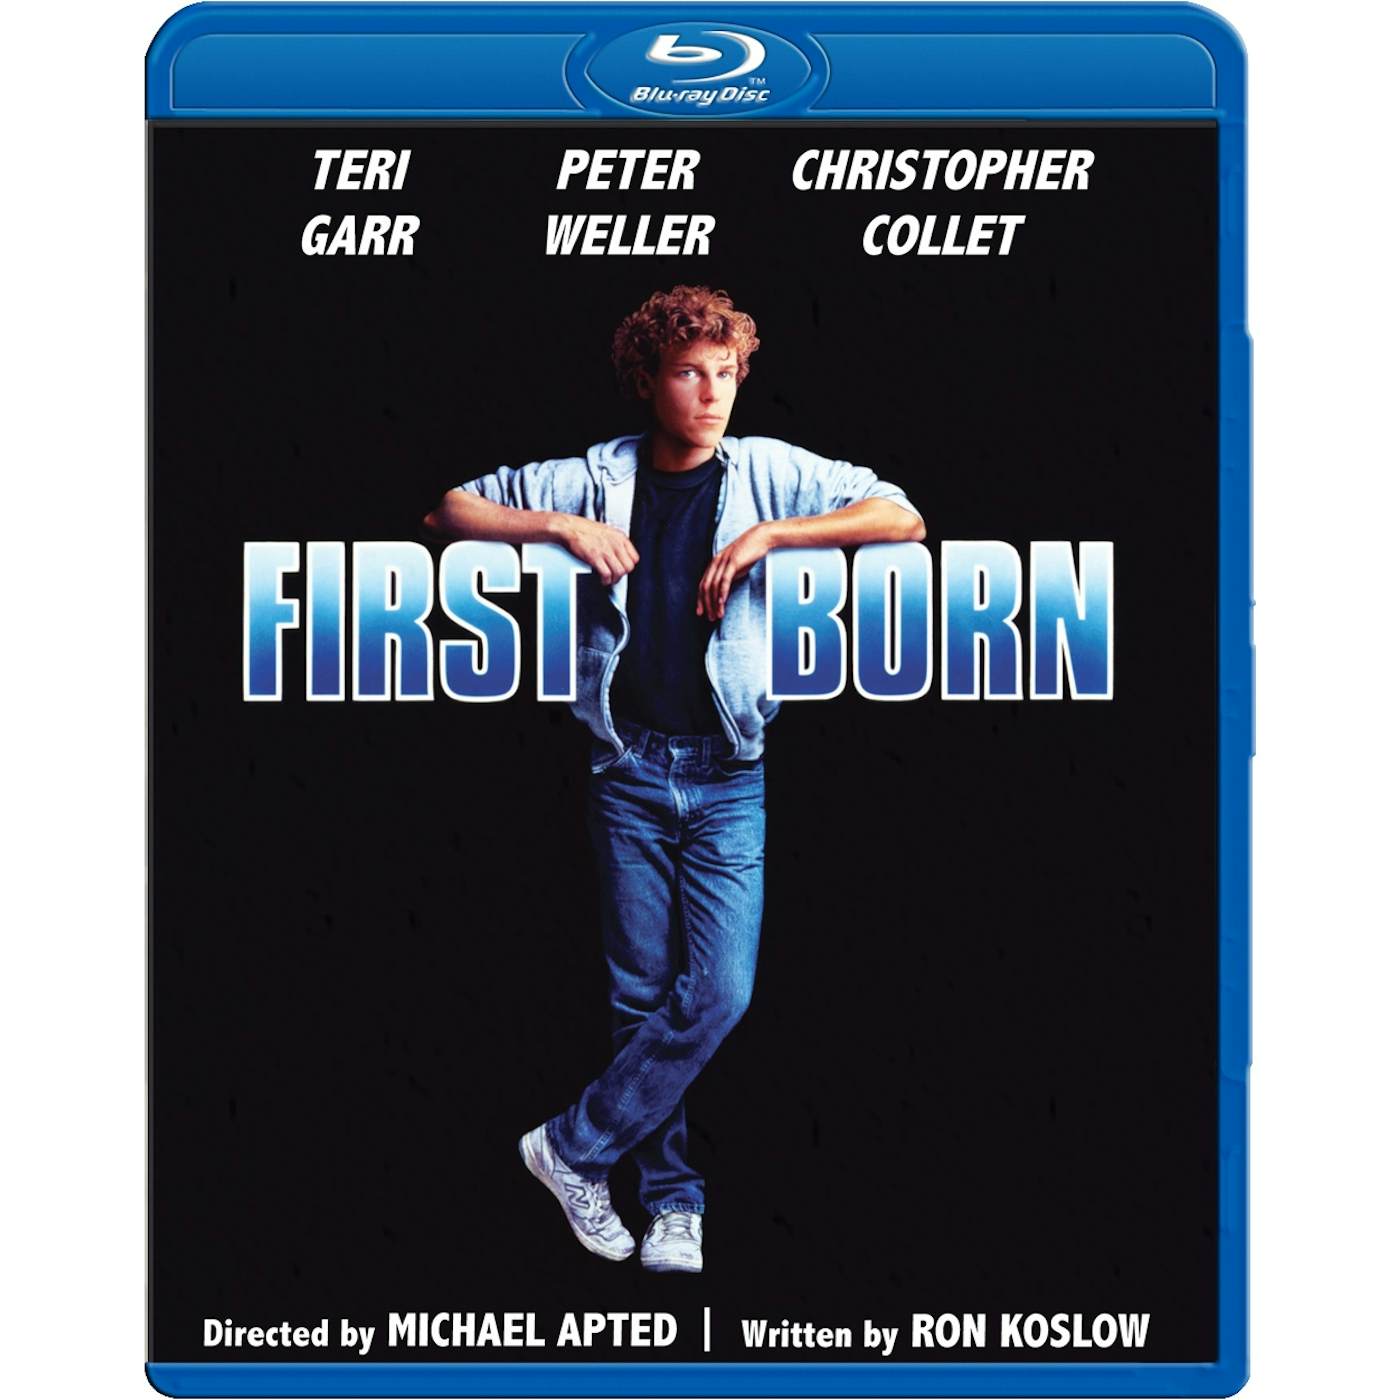 FIRSTBORN Blu-ray